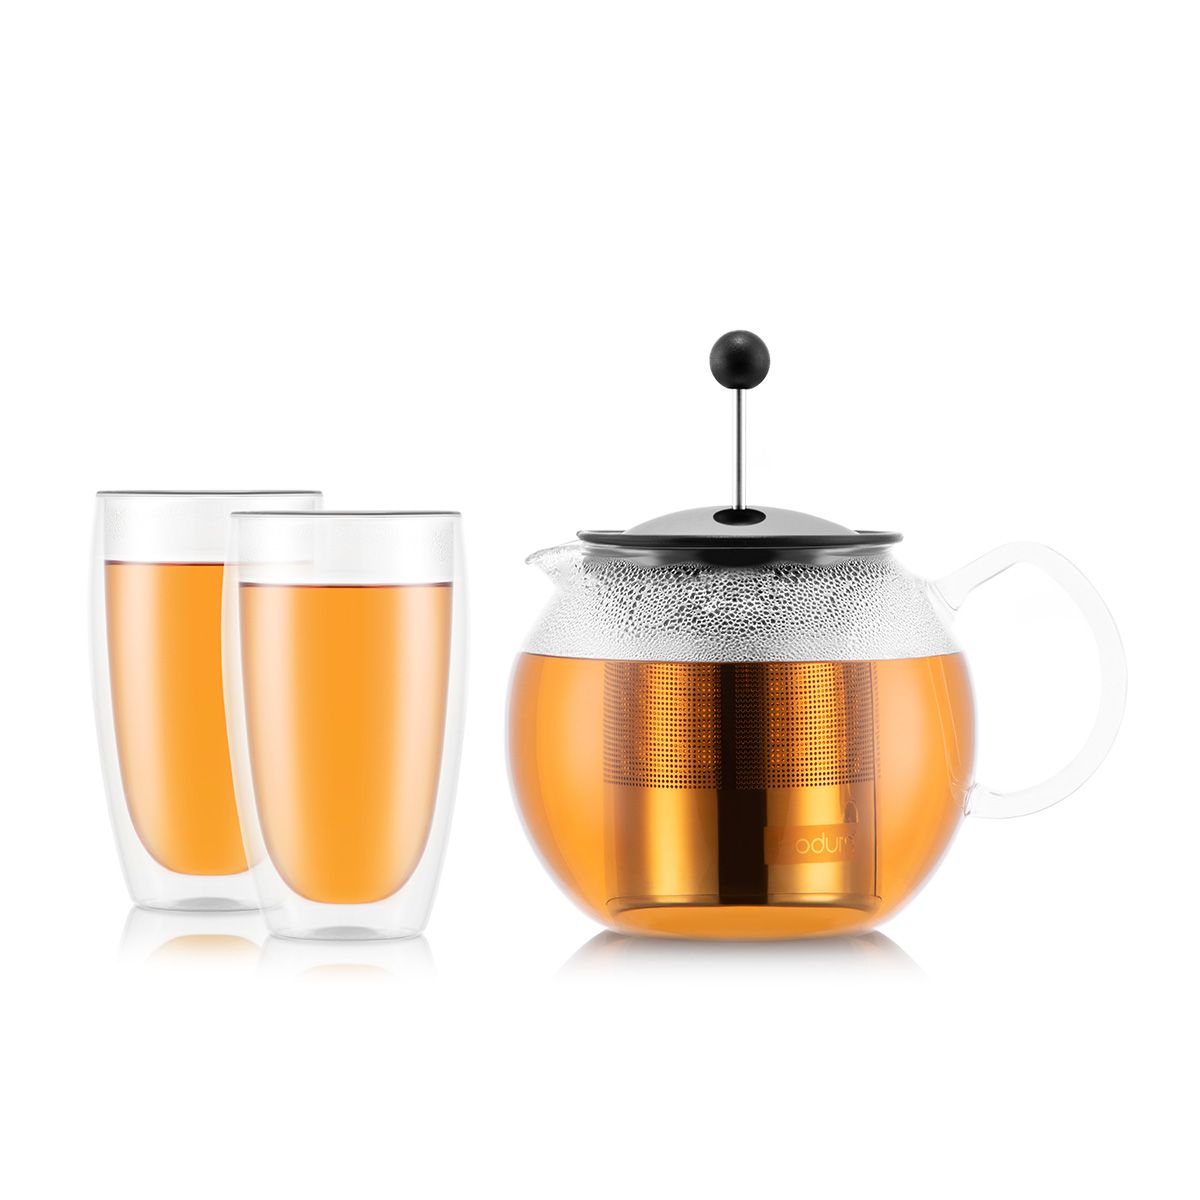 Bodum Assam Tea Maker With Filter Chrome, 1 L